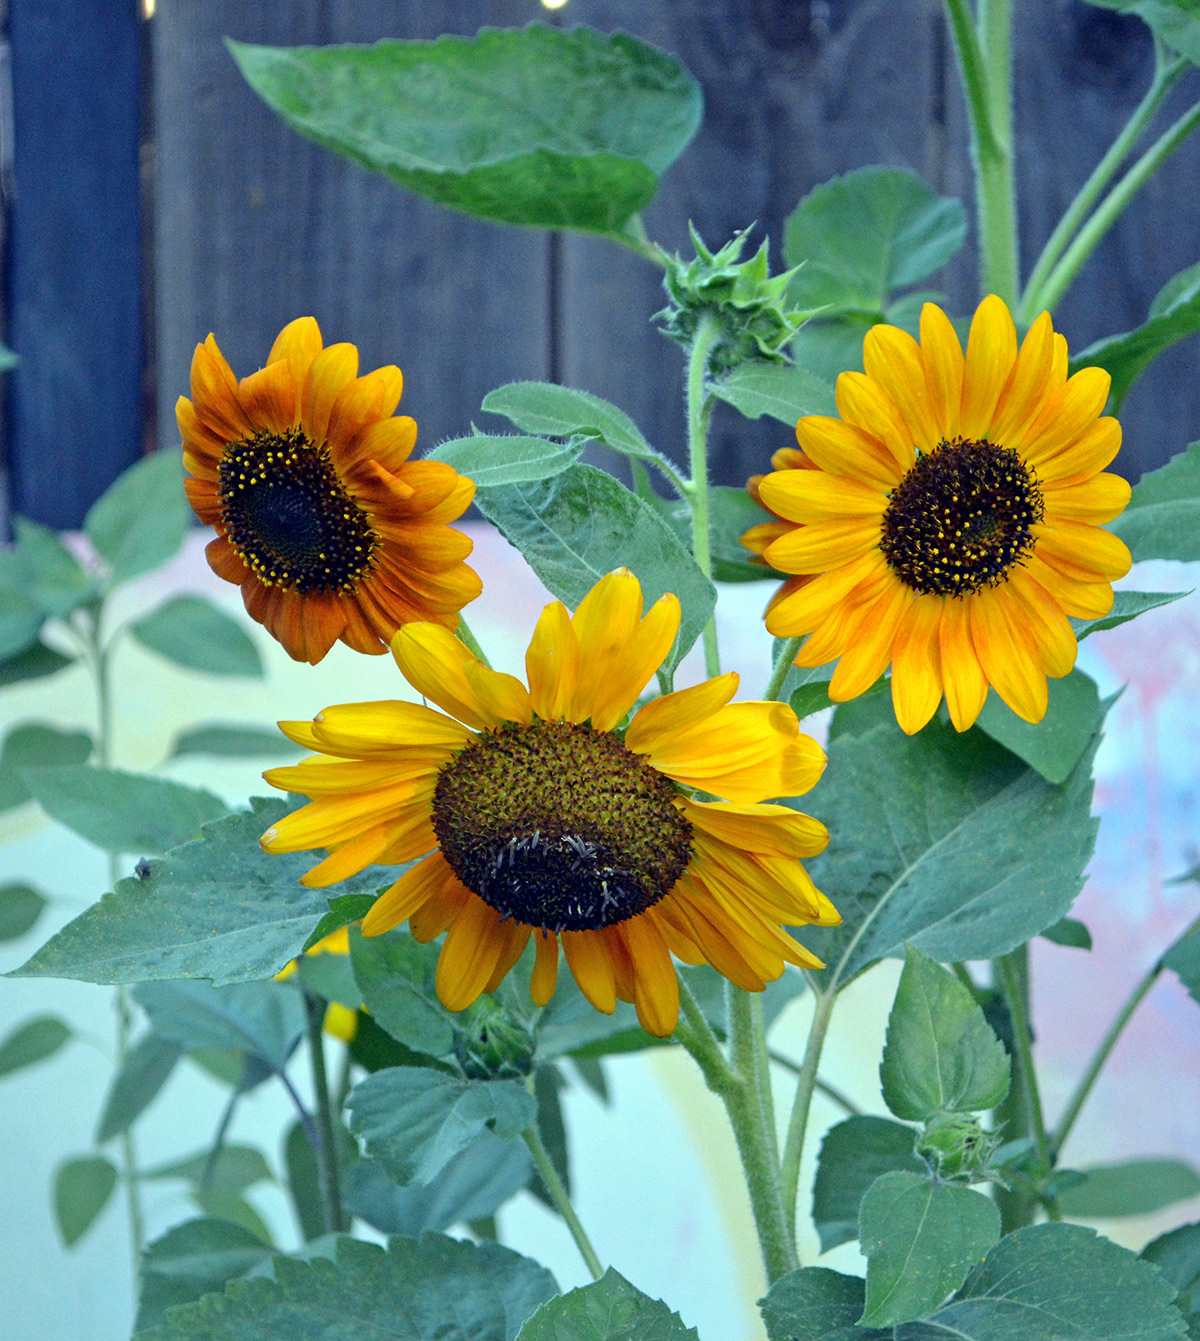 Sunflowers Backyard Gardens plants squash